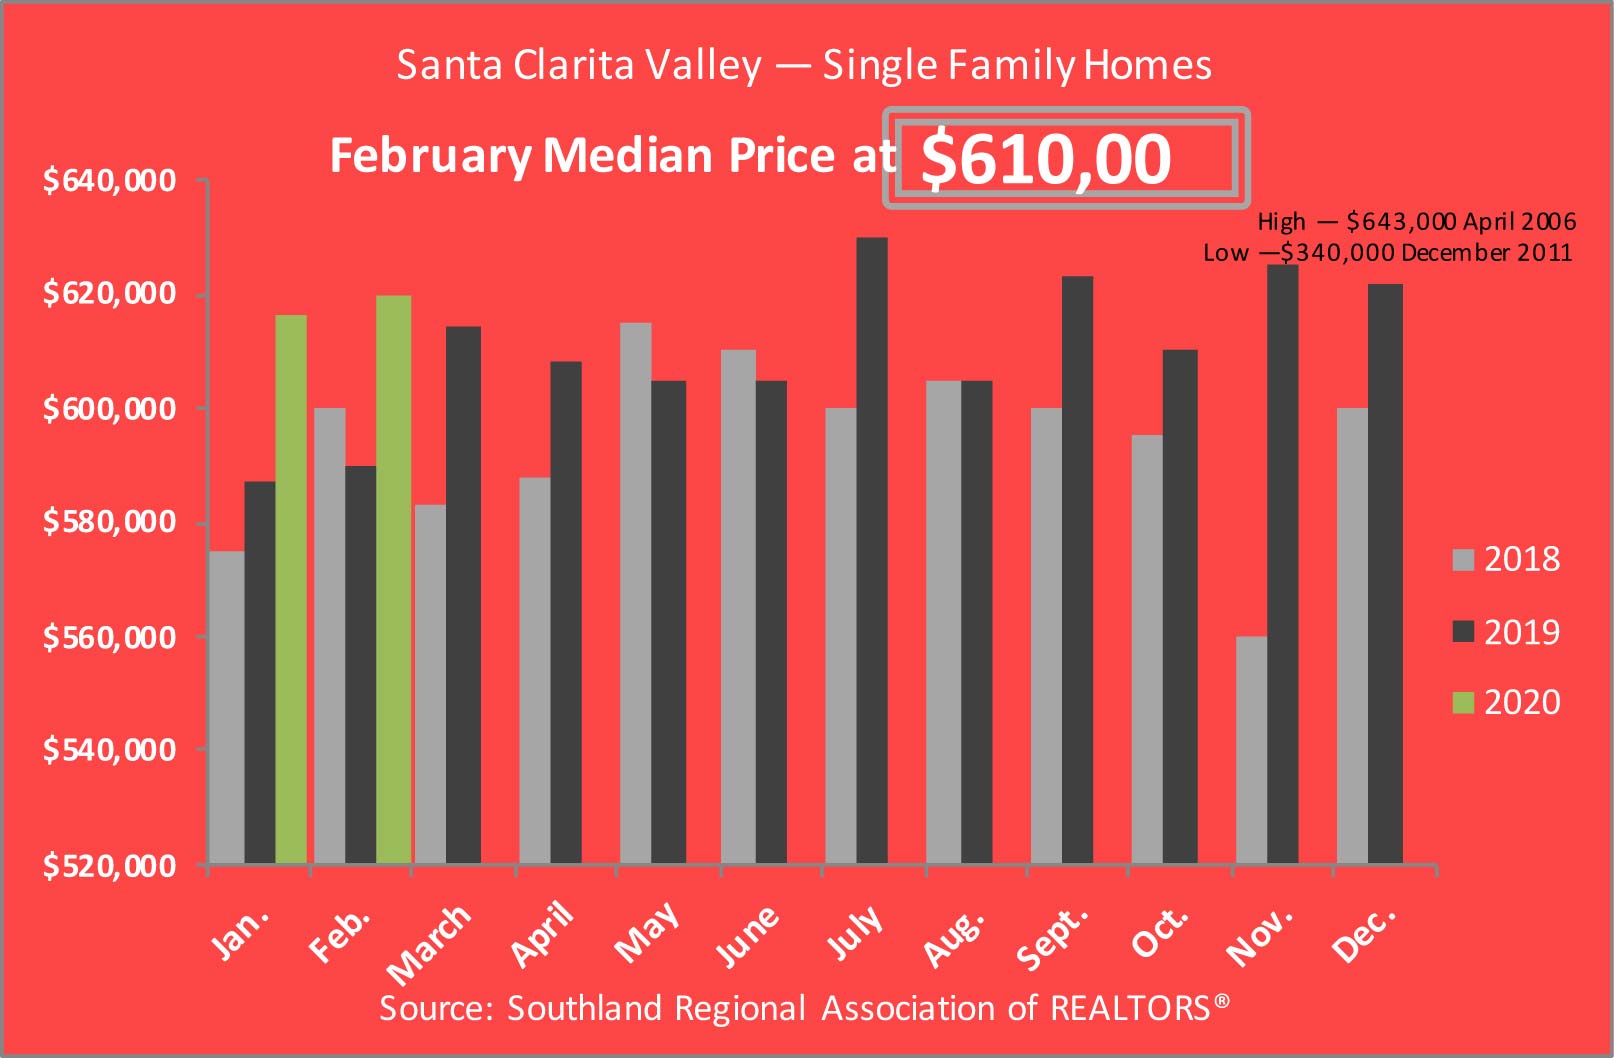 Santa Clarita Valley Single Family Homes Median Price